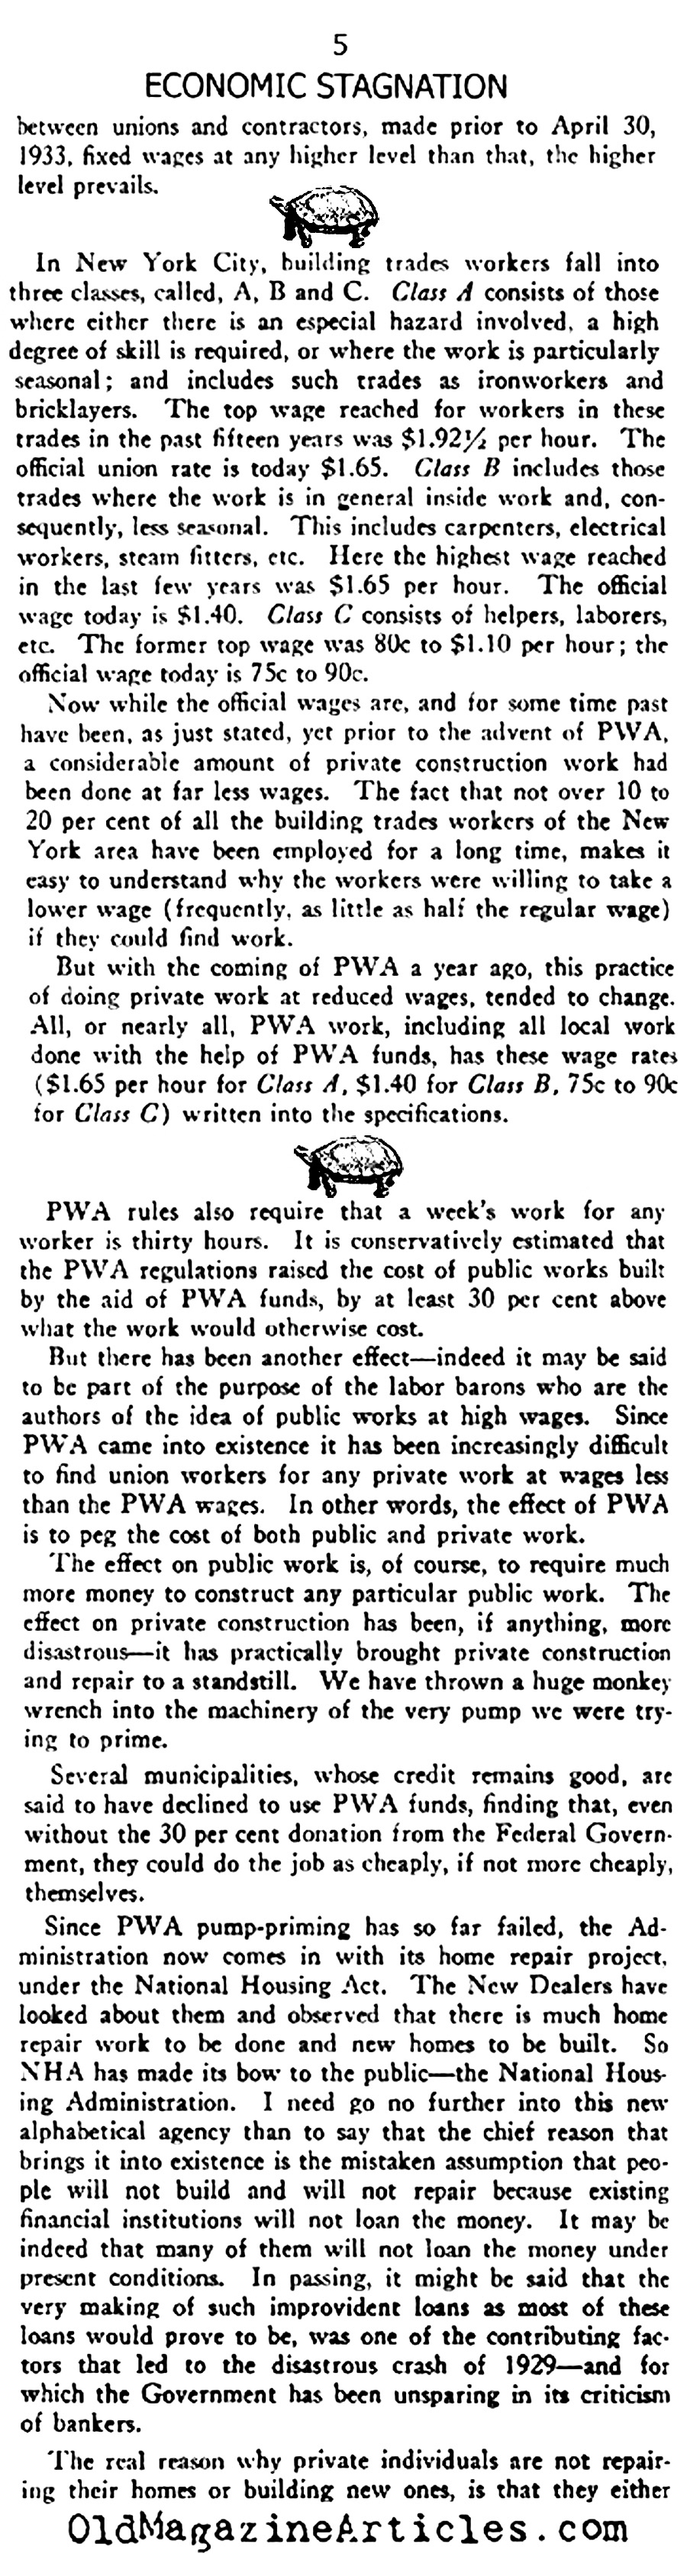 Bankrolling Economic Stagnation (New Outlook Magazine, 1934)